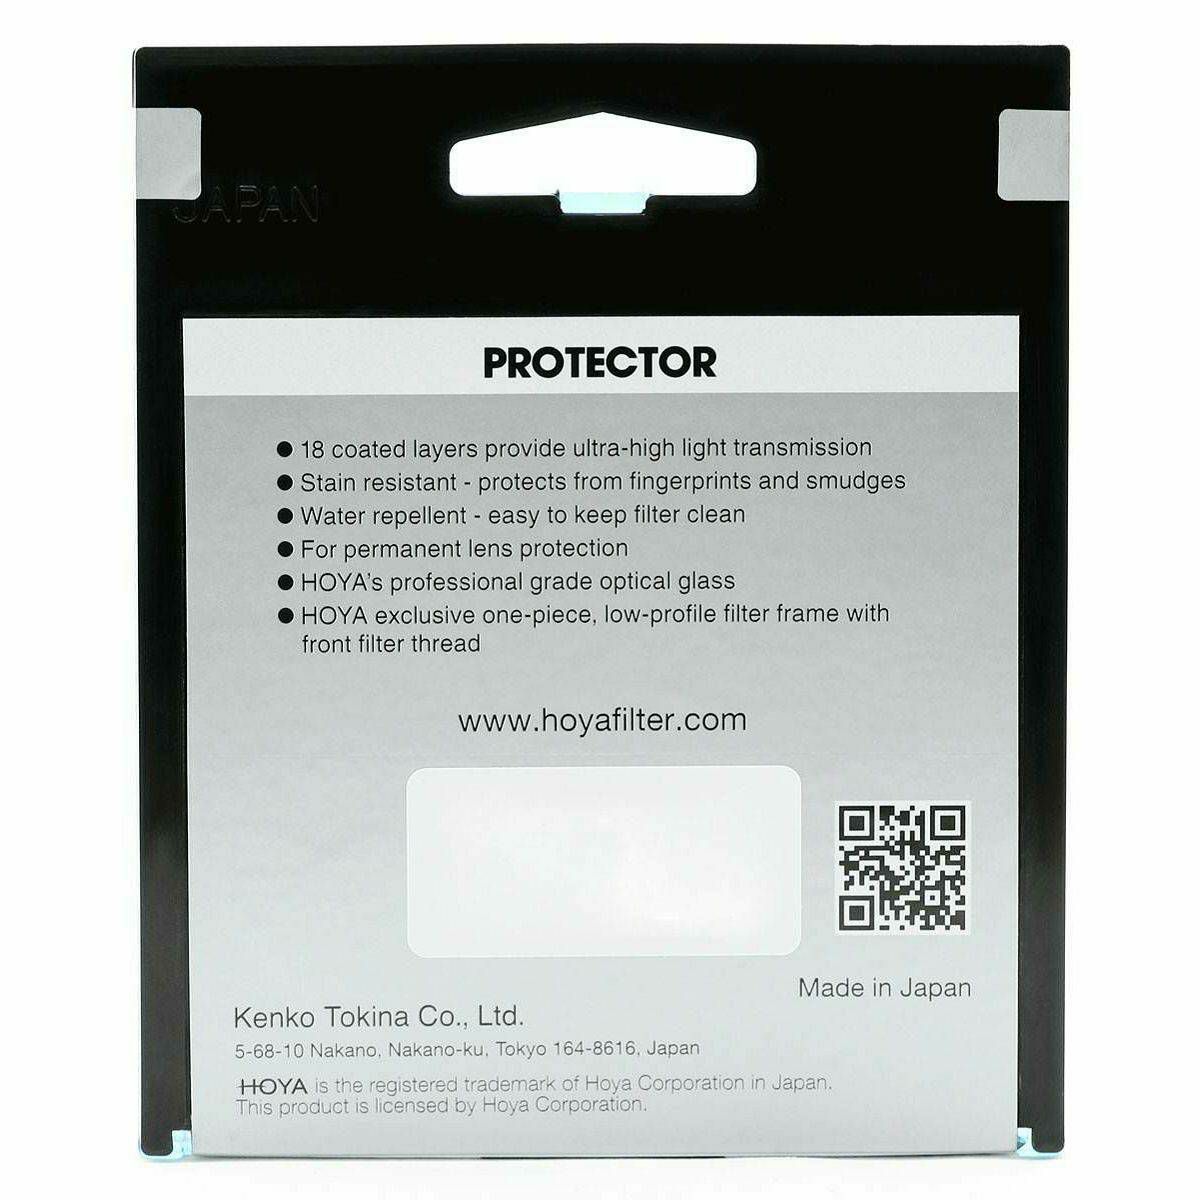 Hoya Fusion One Protector 46mm zaštitni filter